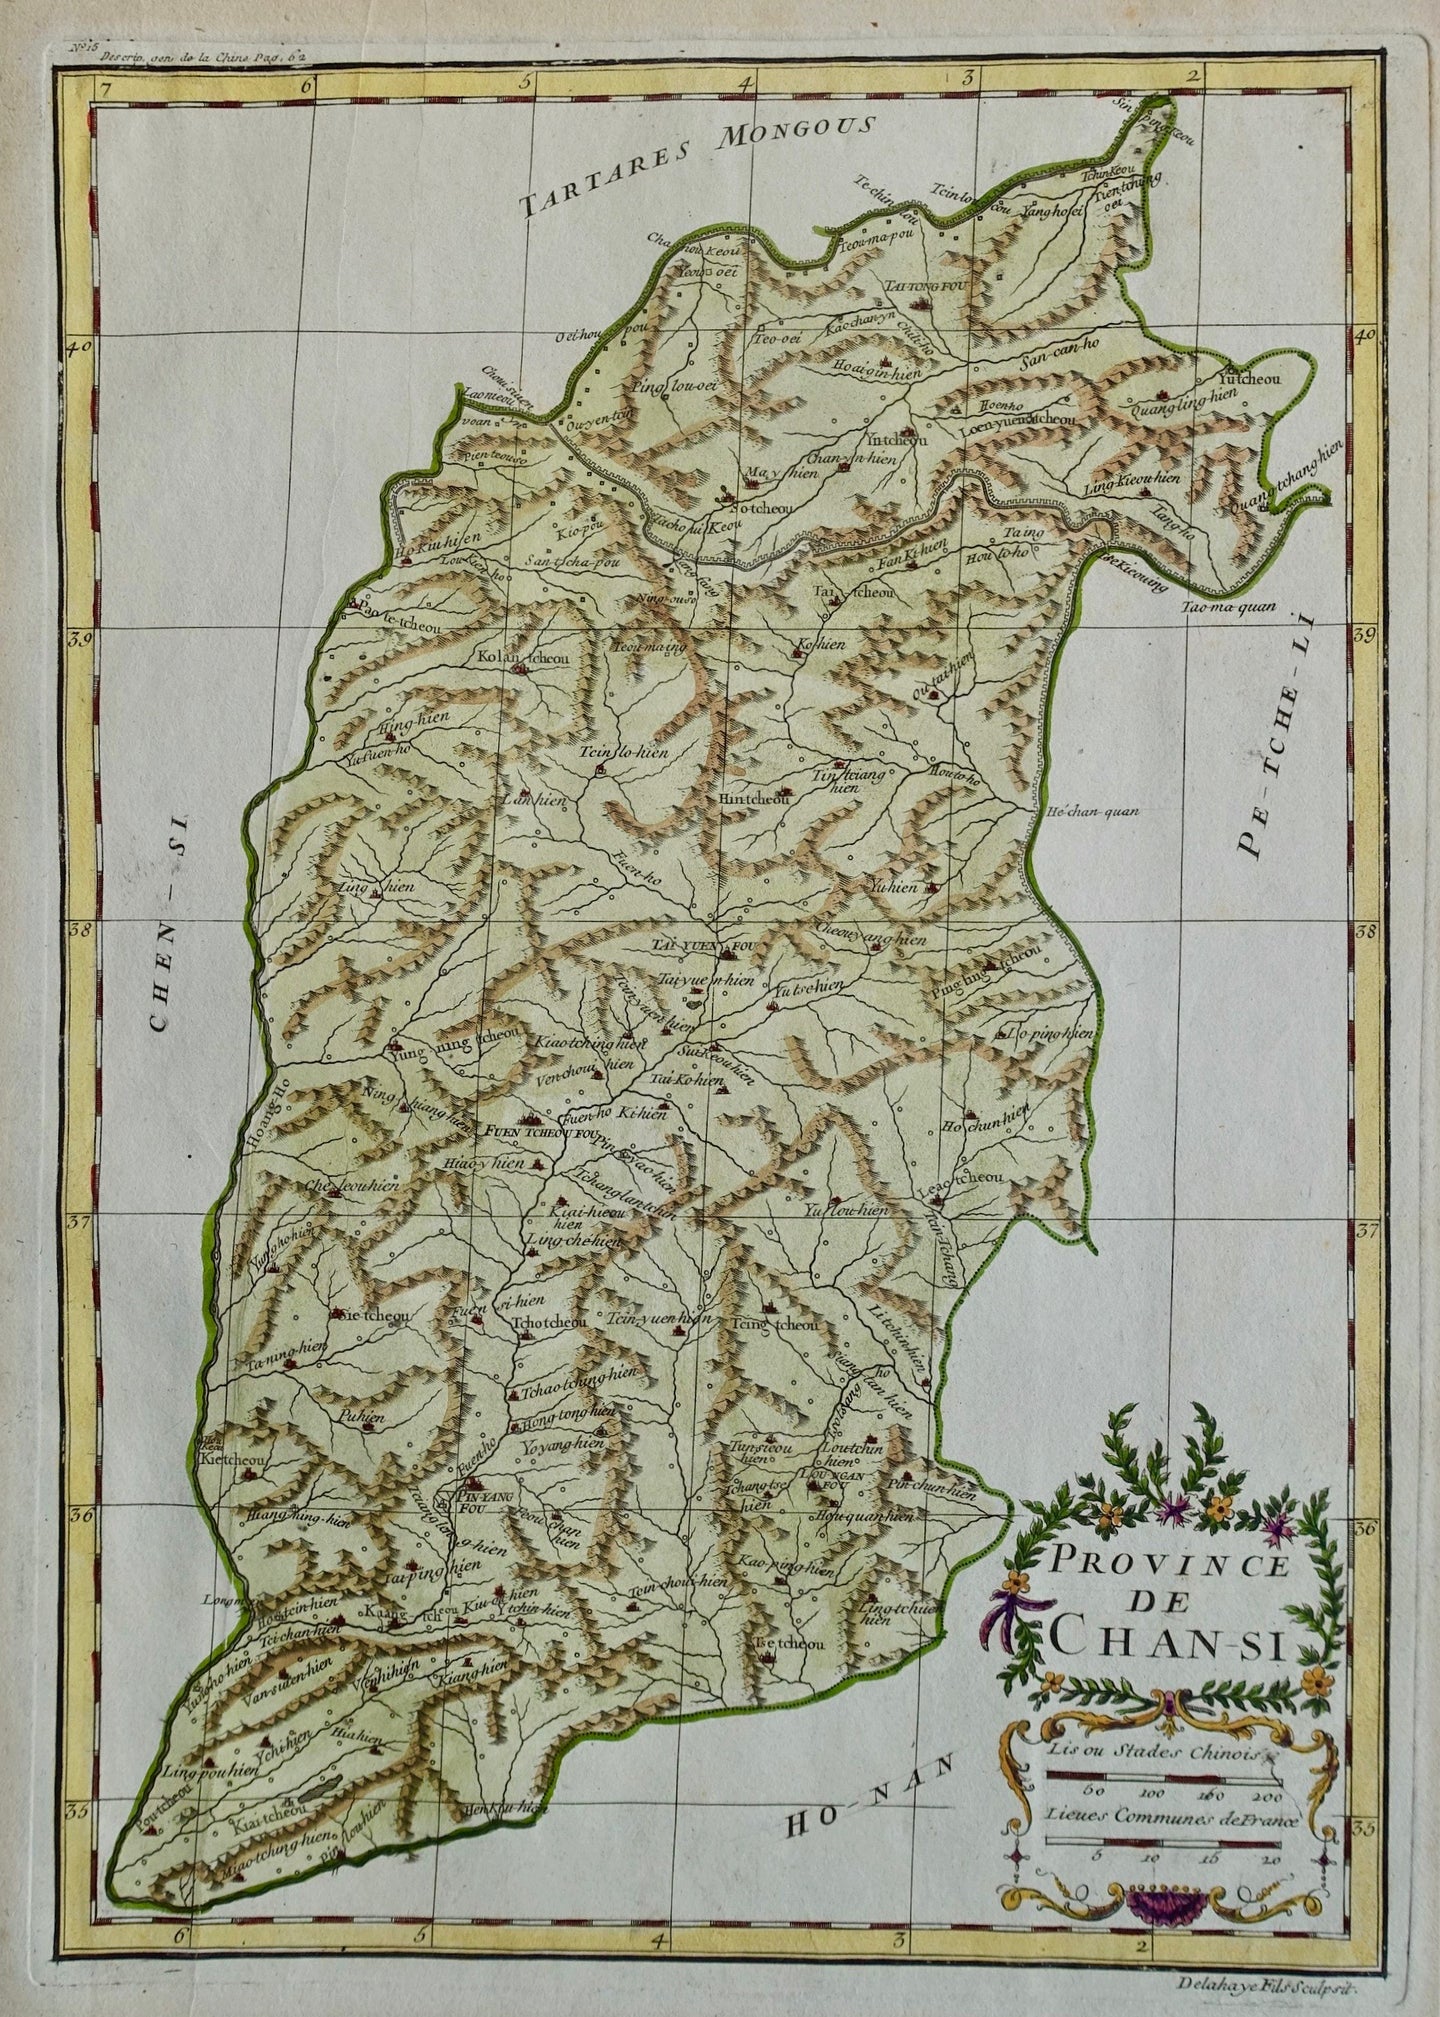 China Shanxi Province Taiyuan - Jean-Baptiste Bourguignon d’Anville - 1735